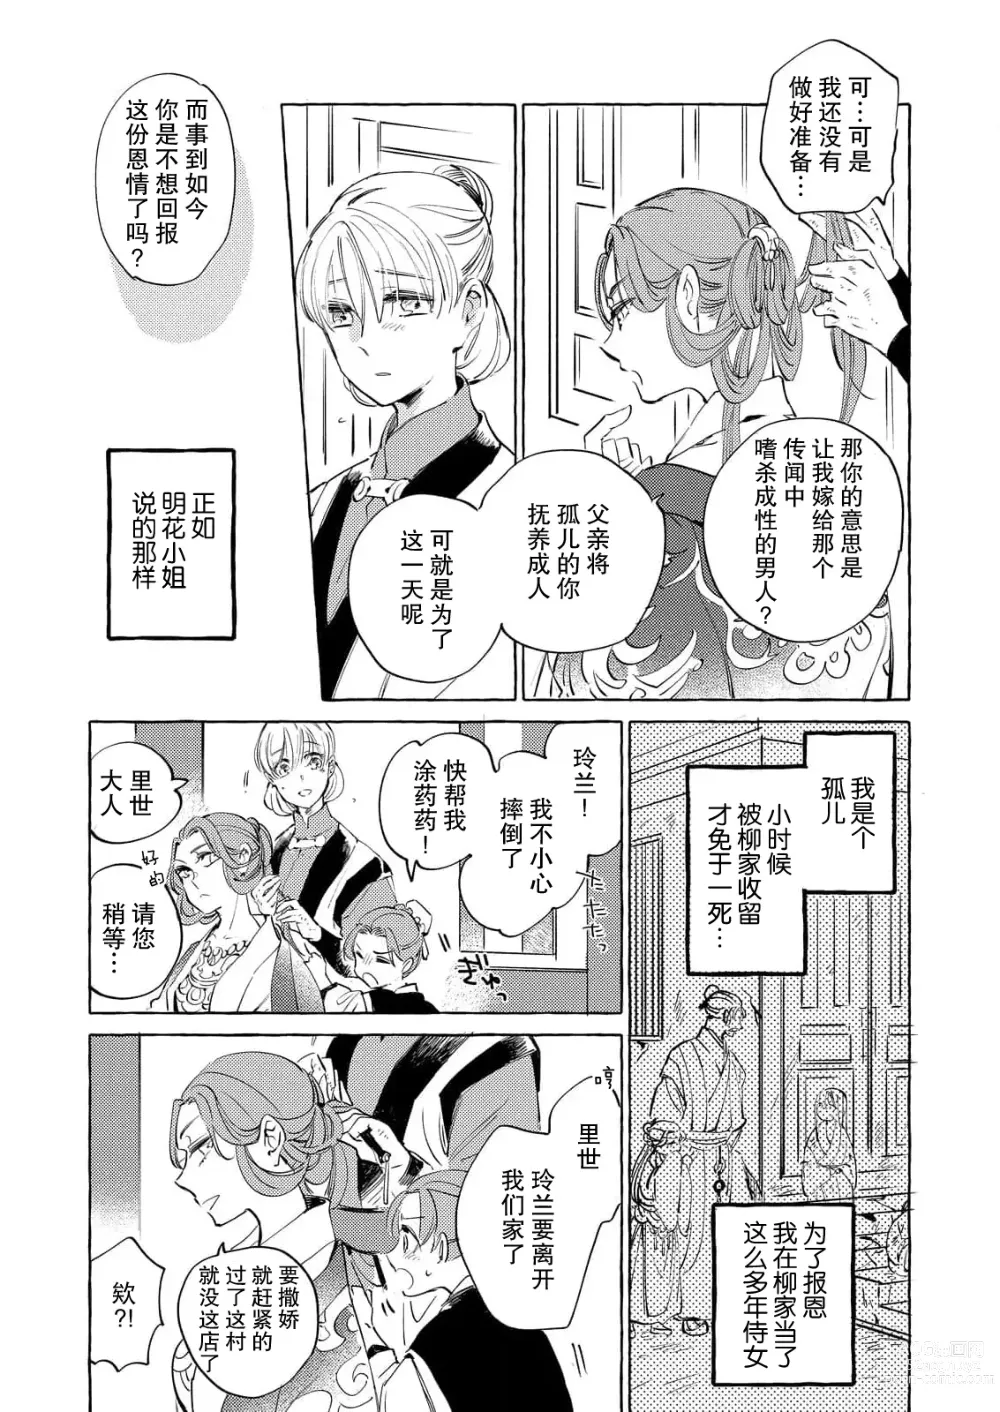 Page 7 of manga 无限宠爱新娘替嫁~冷酷皇子今夜也宠溺入骨~ 1-2 end